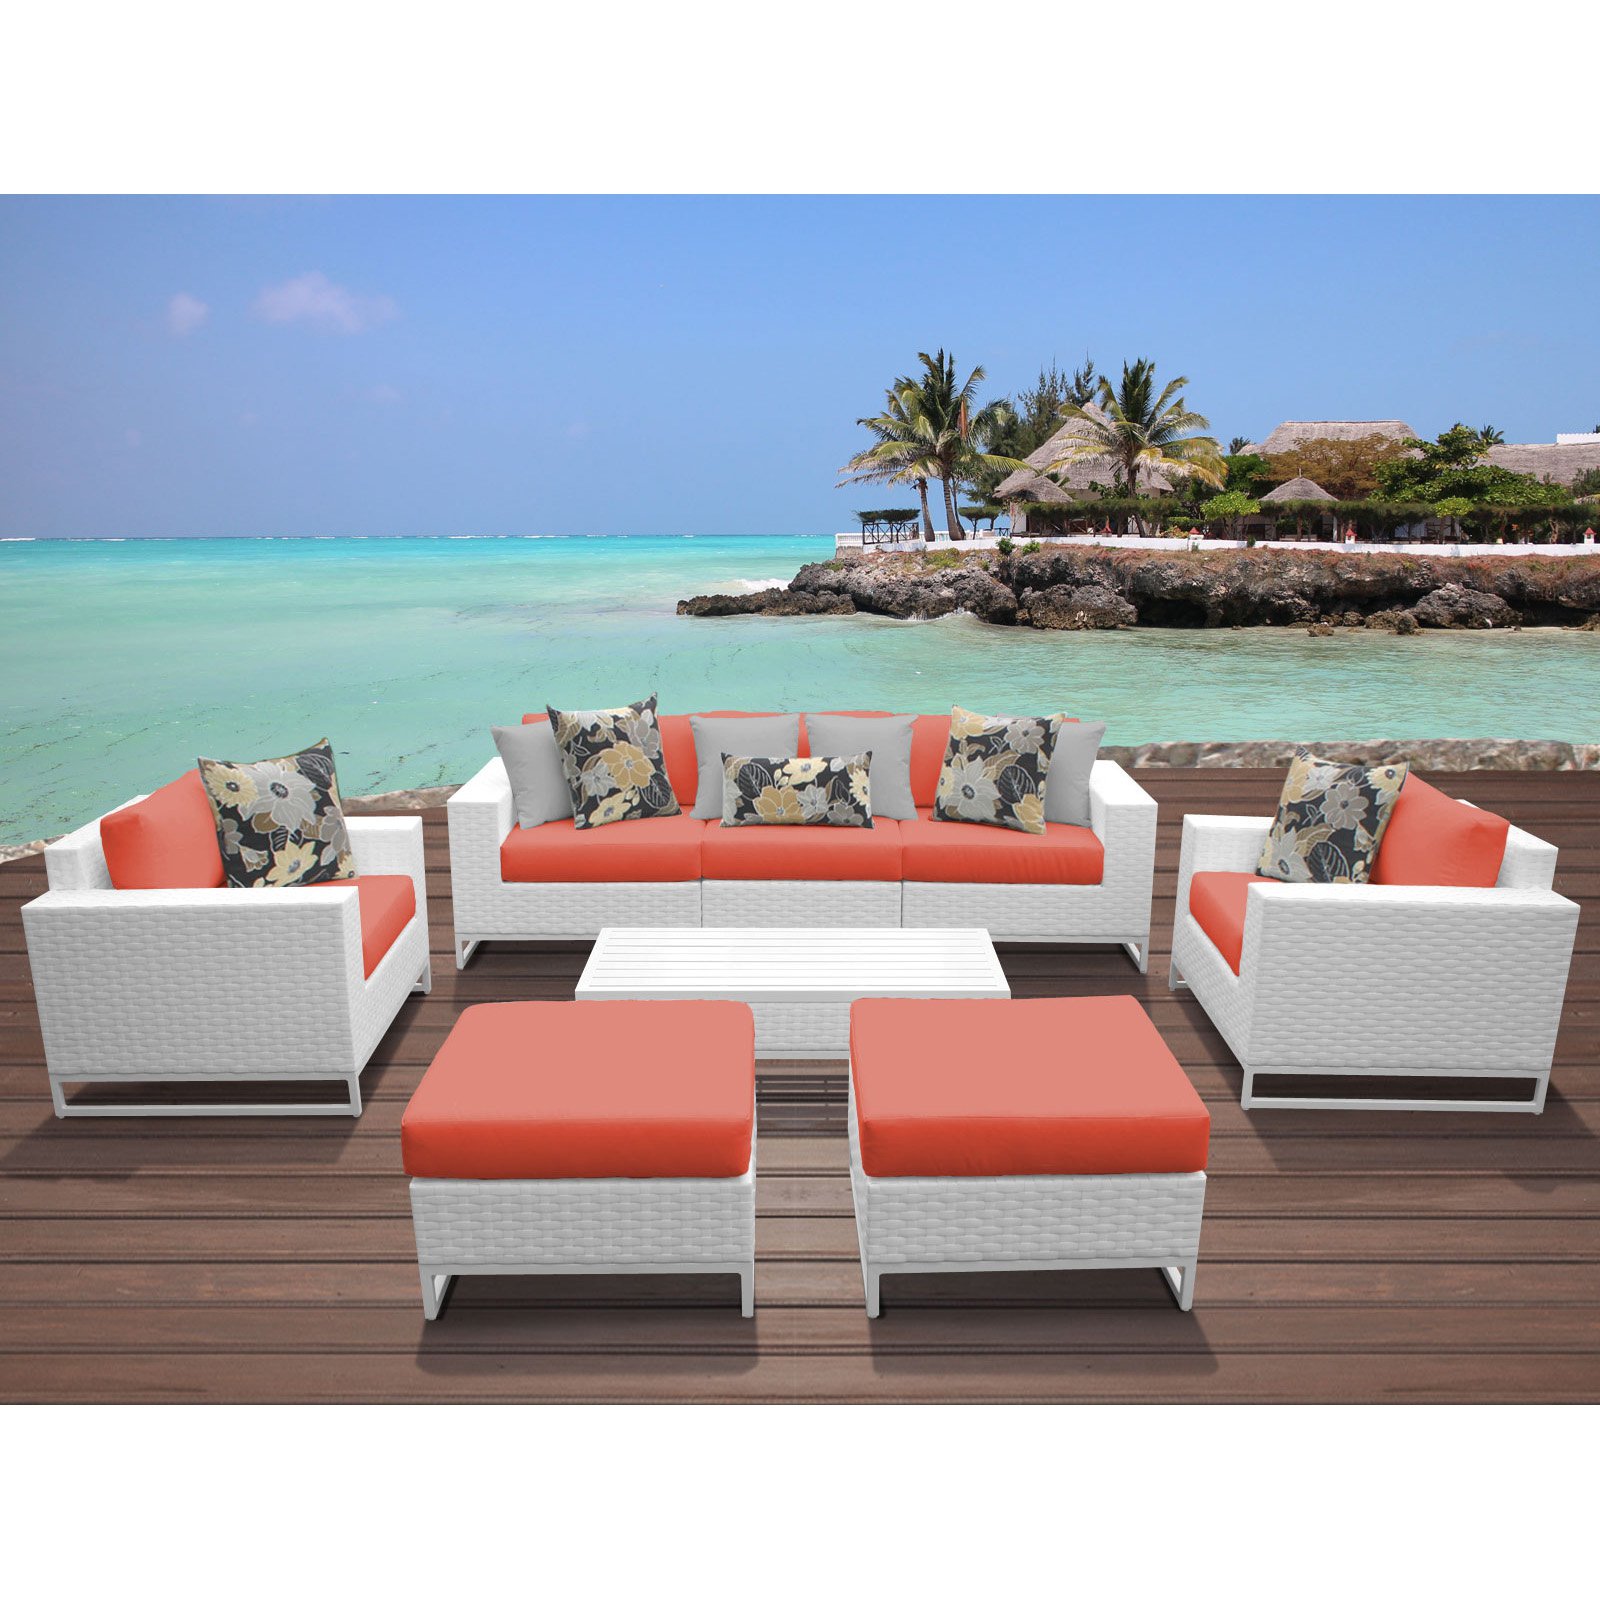 TK Classics Miami 8 Piece Outdoor Wicker Patio Furniture Set 08a - image 1 of 3